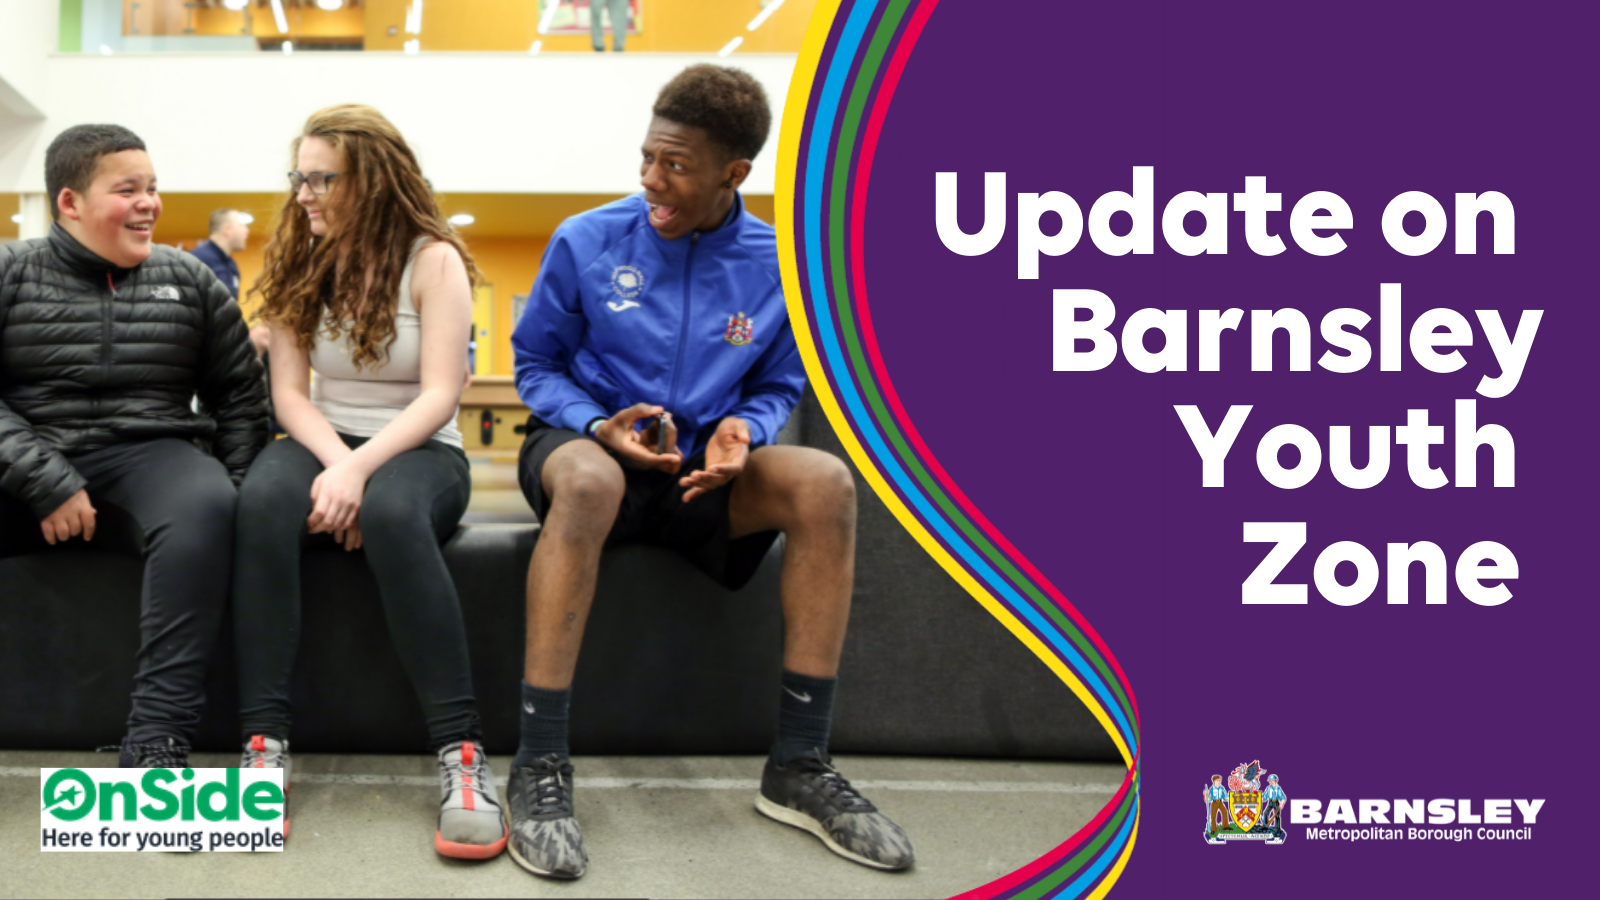 Update on Barnsley Youth Zone